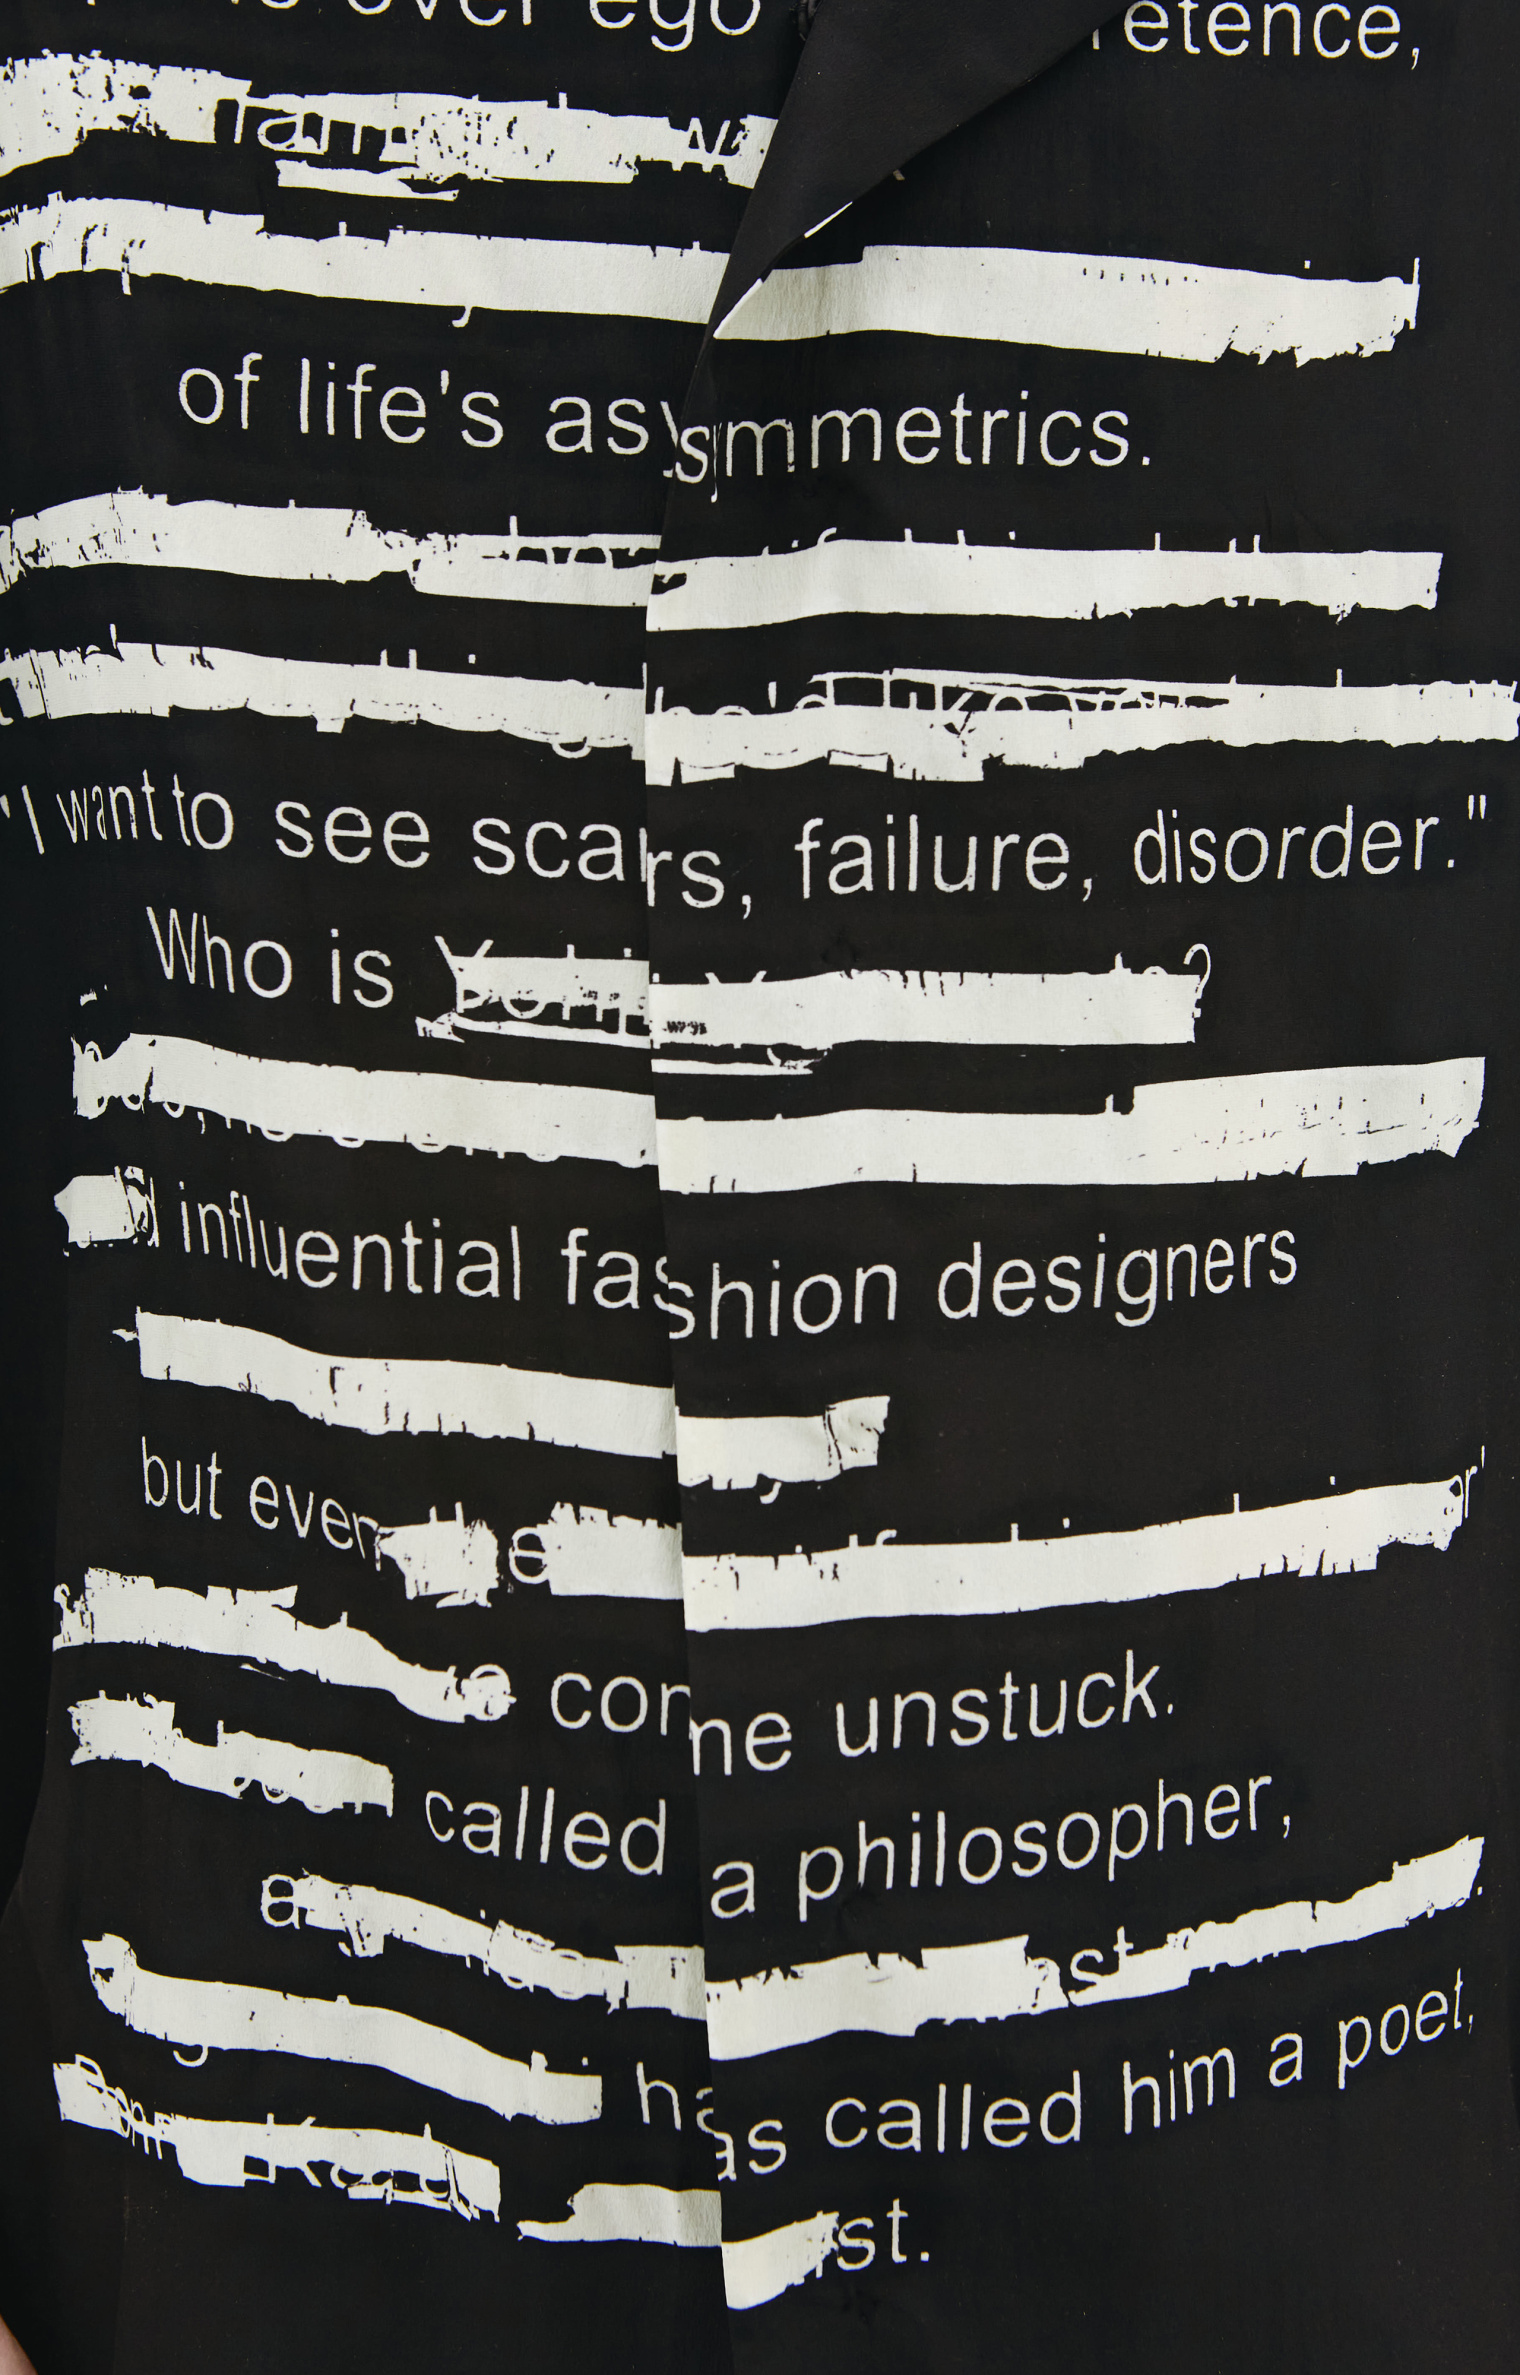 Yohji Yamamoto Рубашка из шелка с надписями